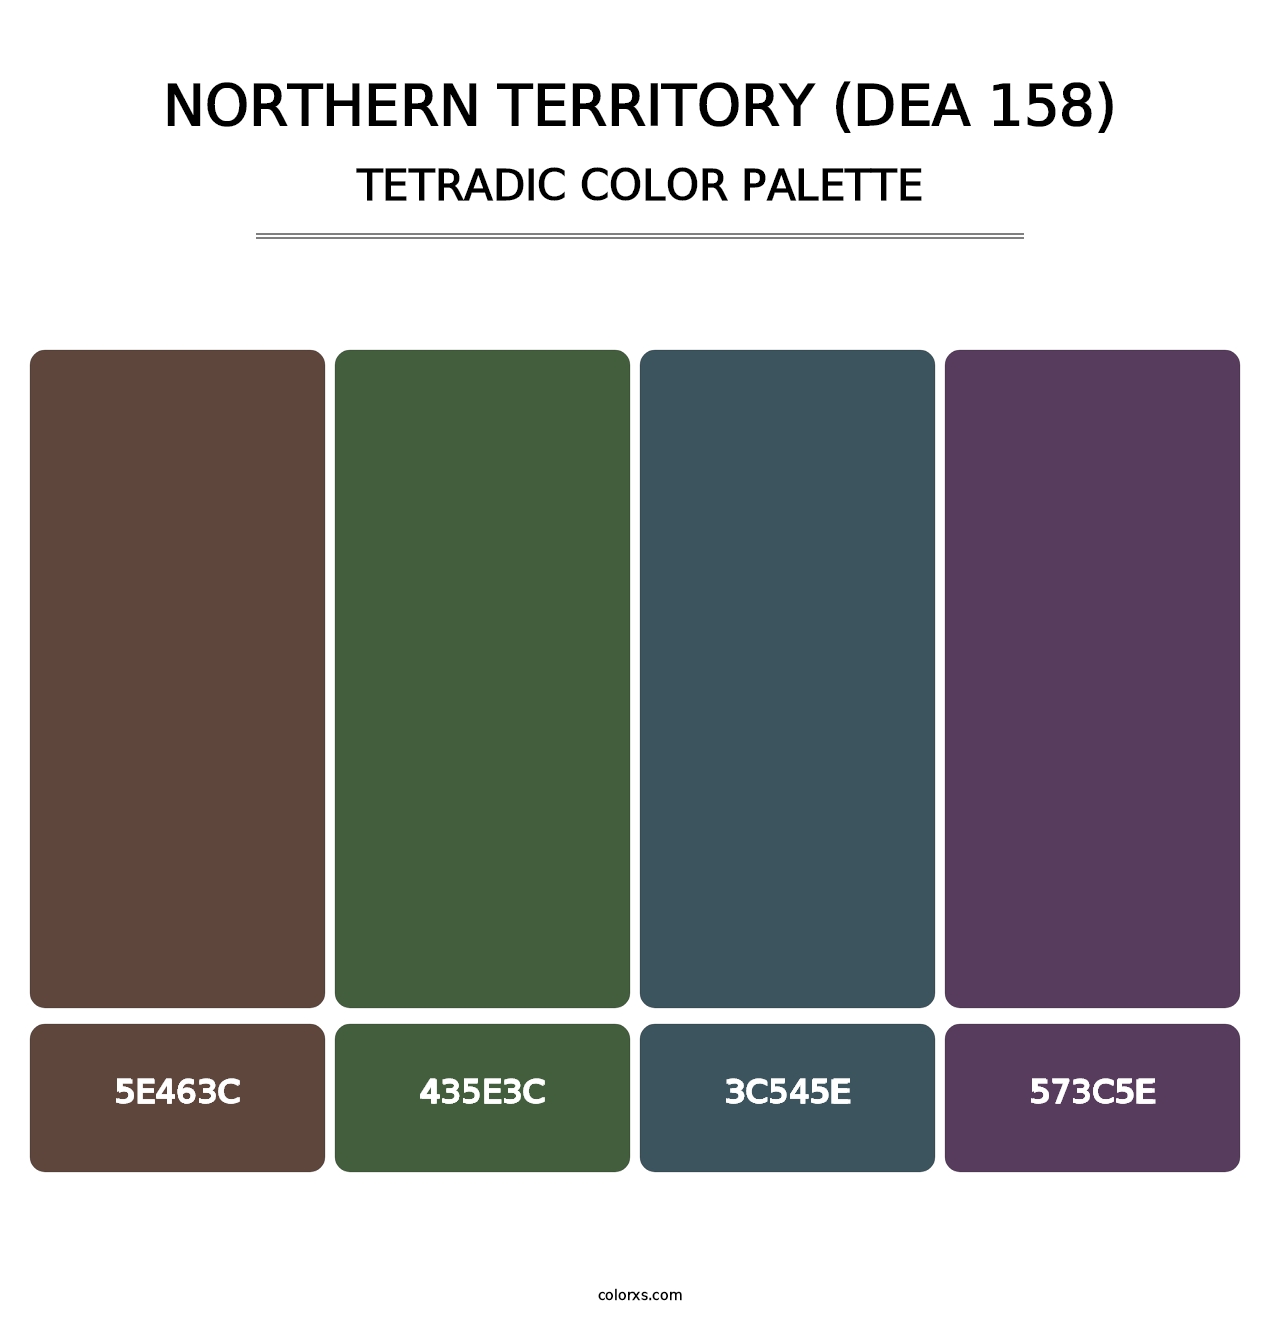 Northern Territory (DEA 158) - Tetradic Color Palette